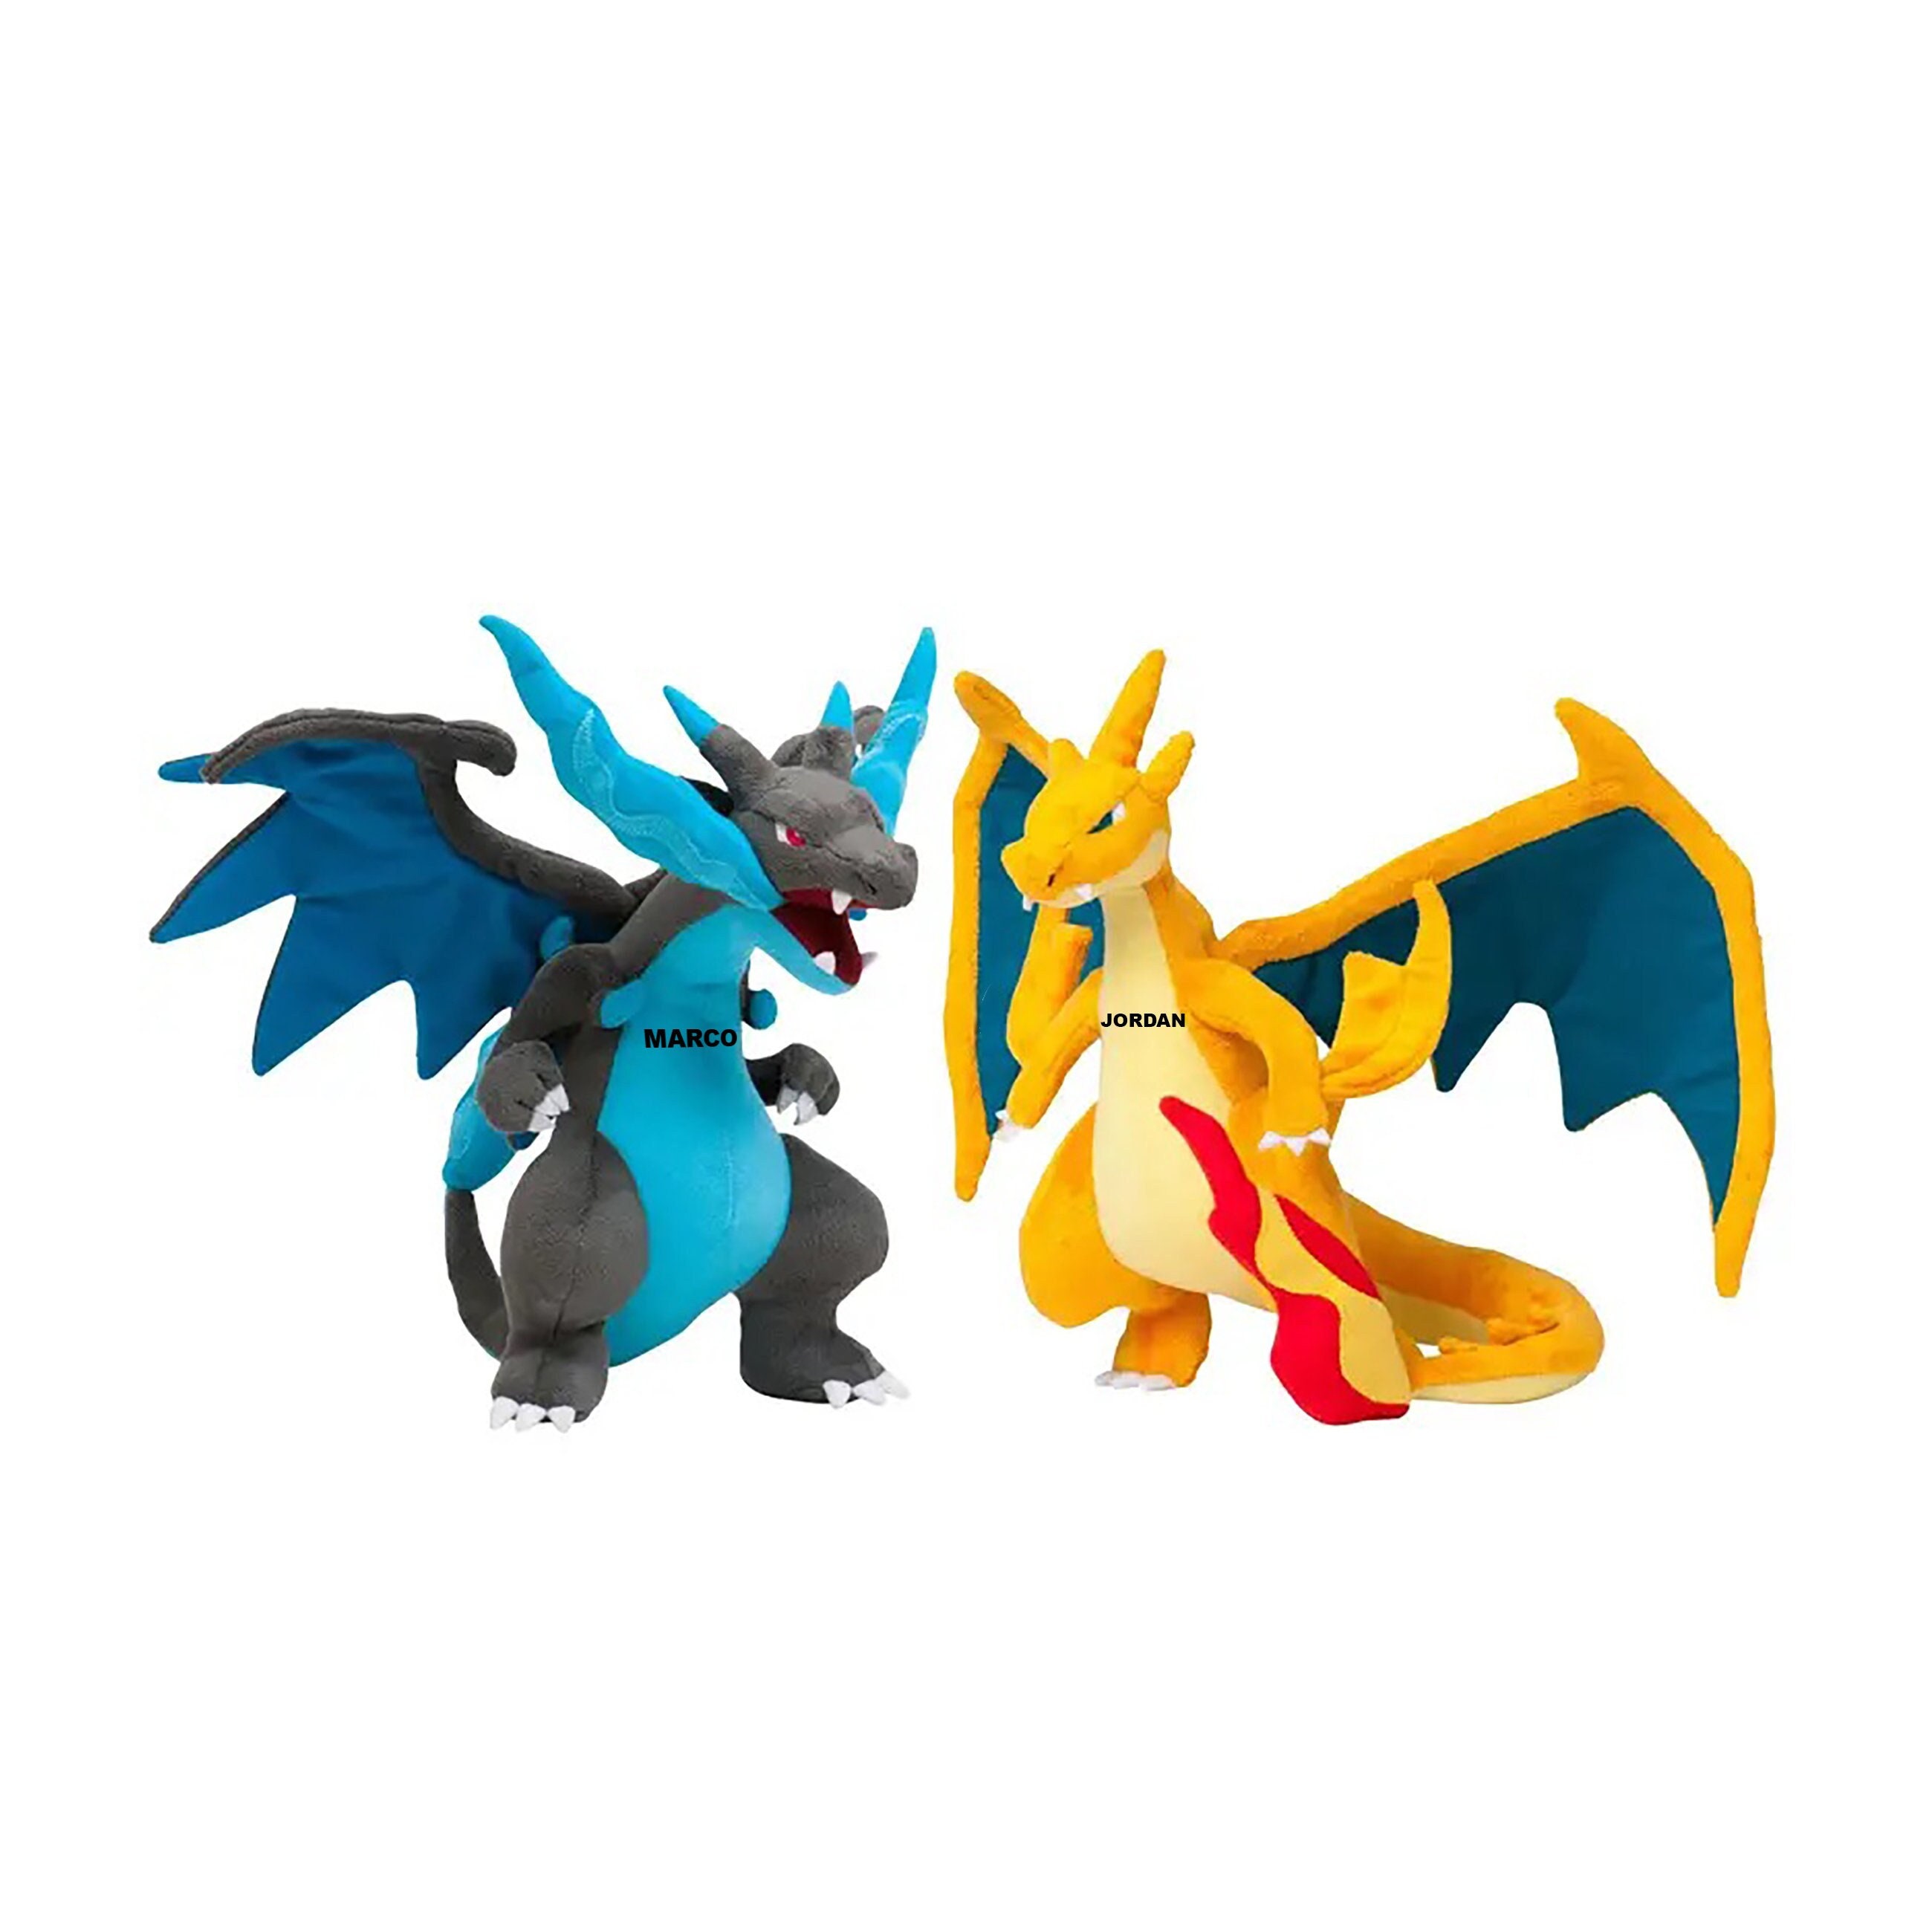 Pokemon Shiny Dynamax Charizard Plush Toy Charizard XY Fire Dragon